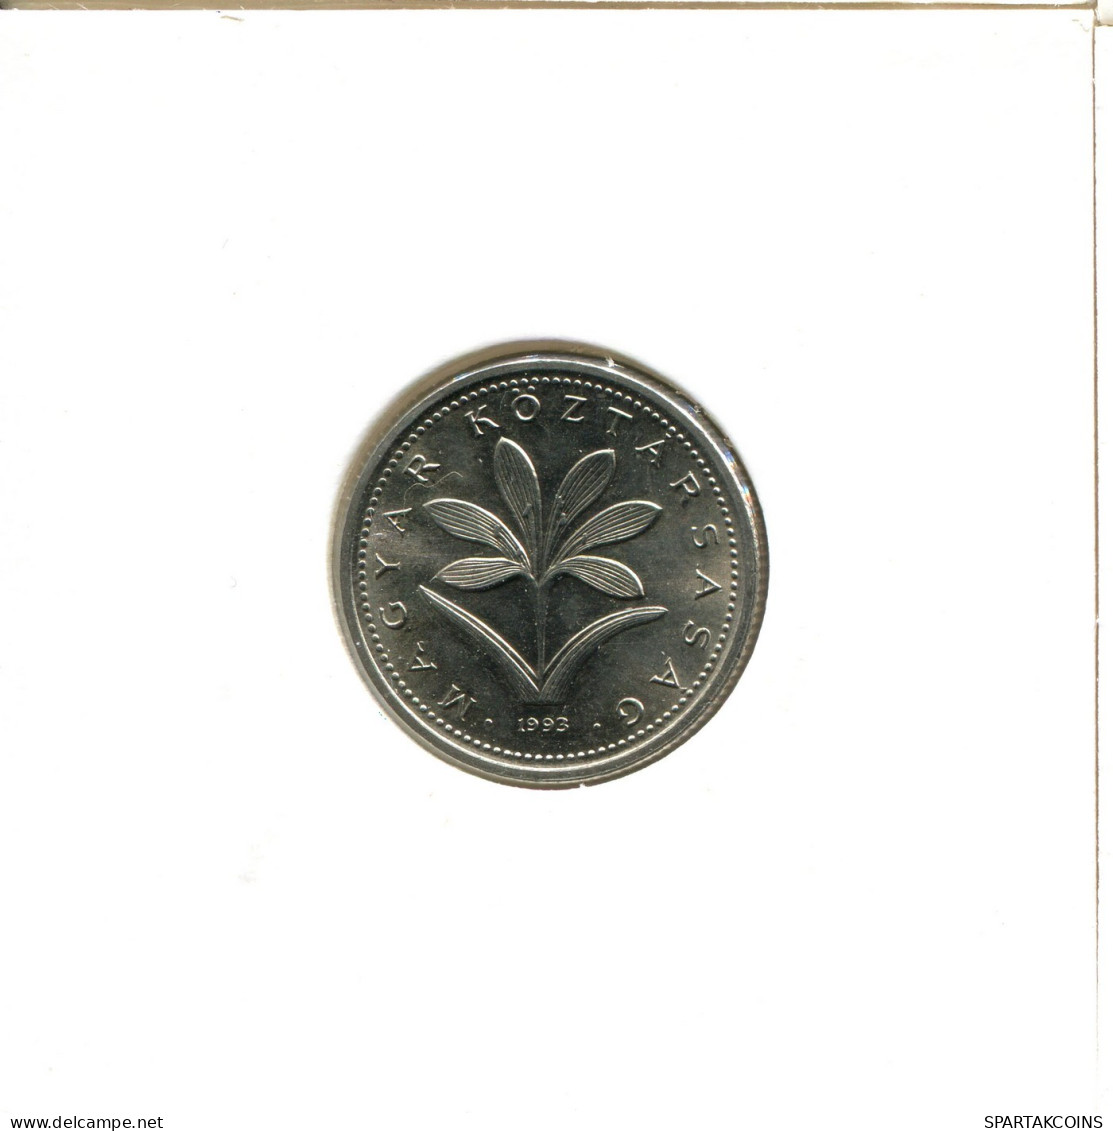 2 FORINT 1993 HUNGARY Coin #AX743.U.A - Hungary